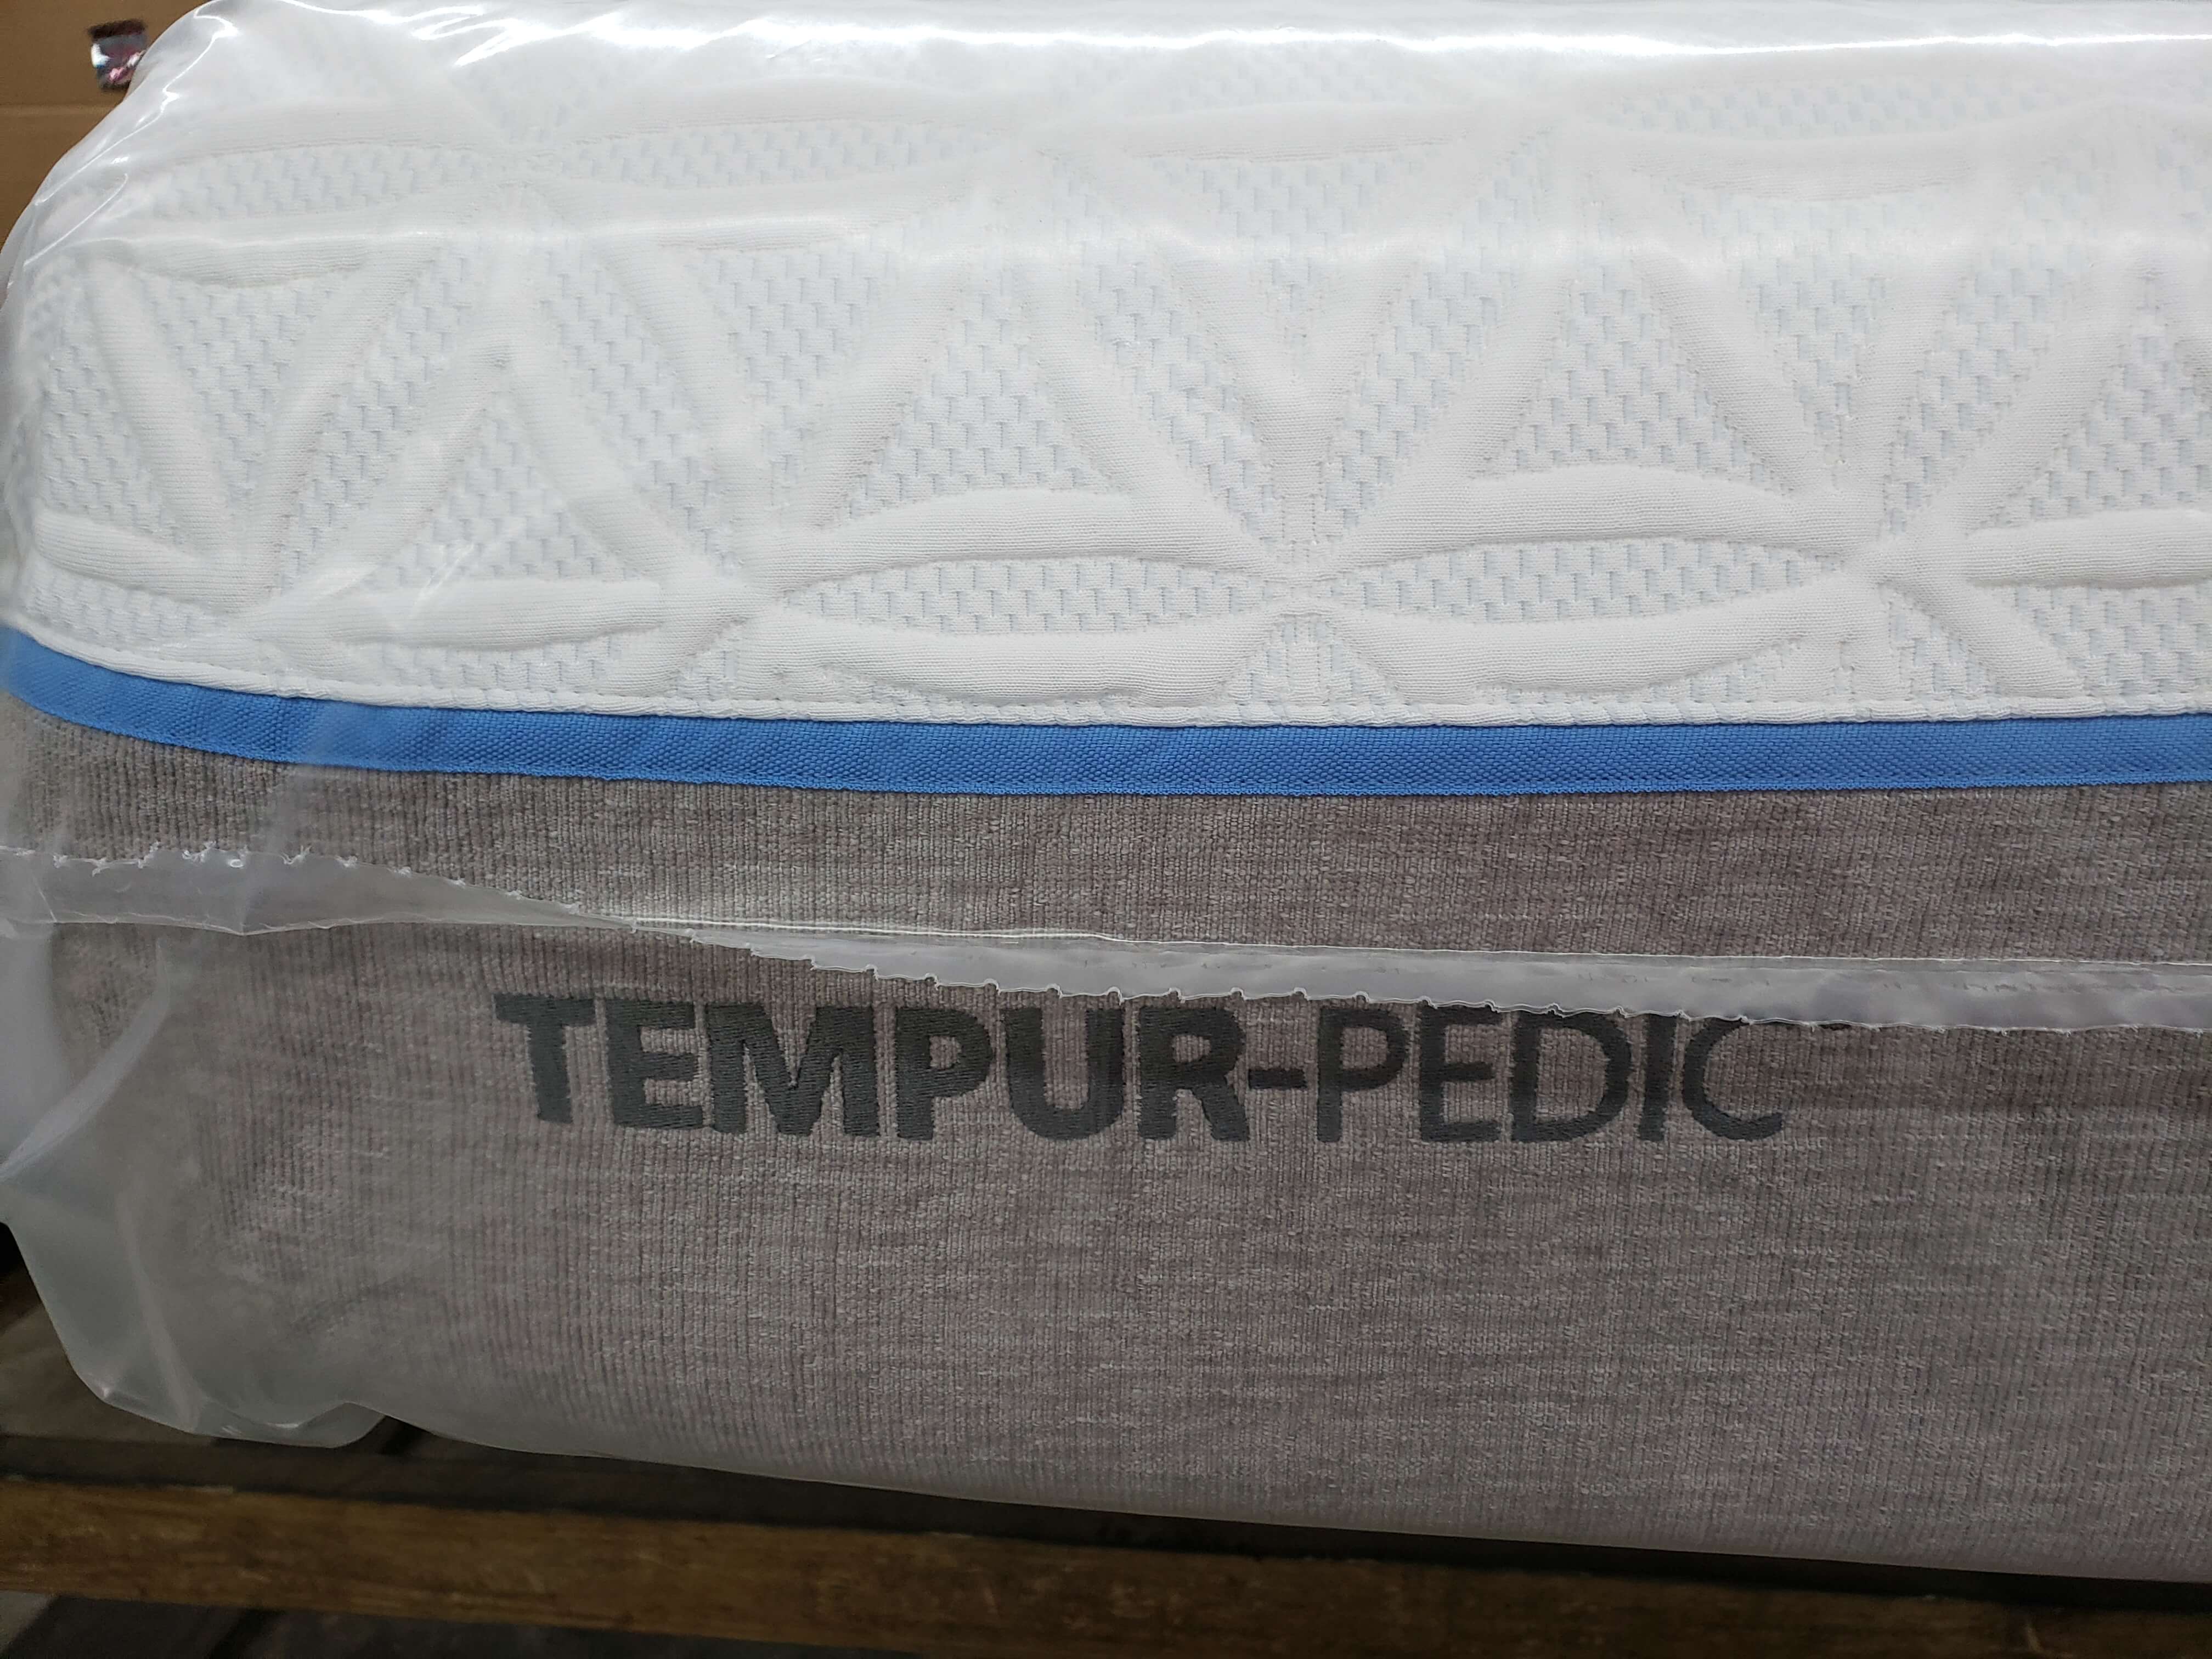 mattress firm tempur pedic cloud supreme breeze